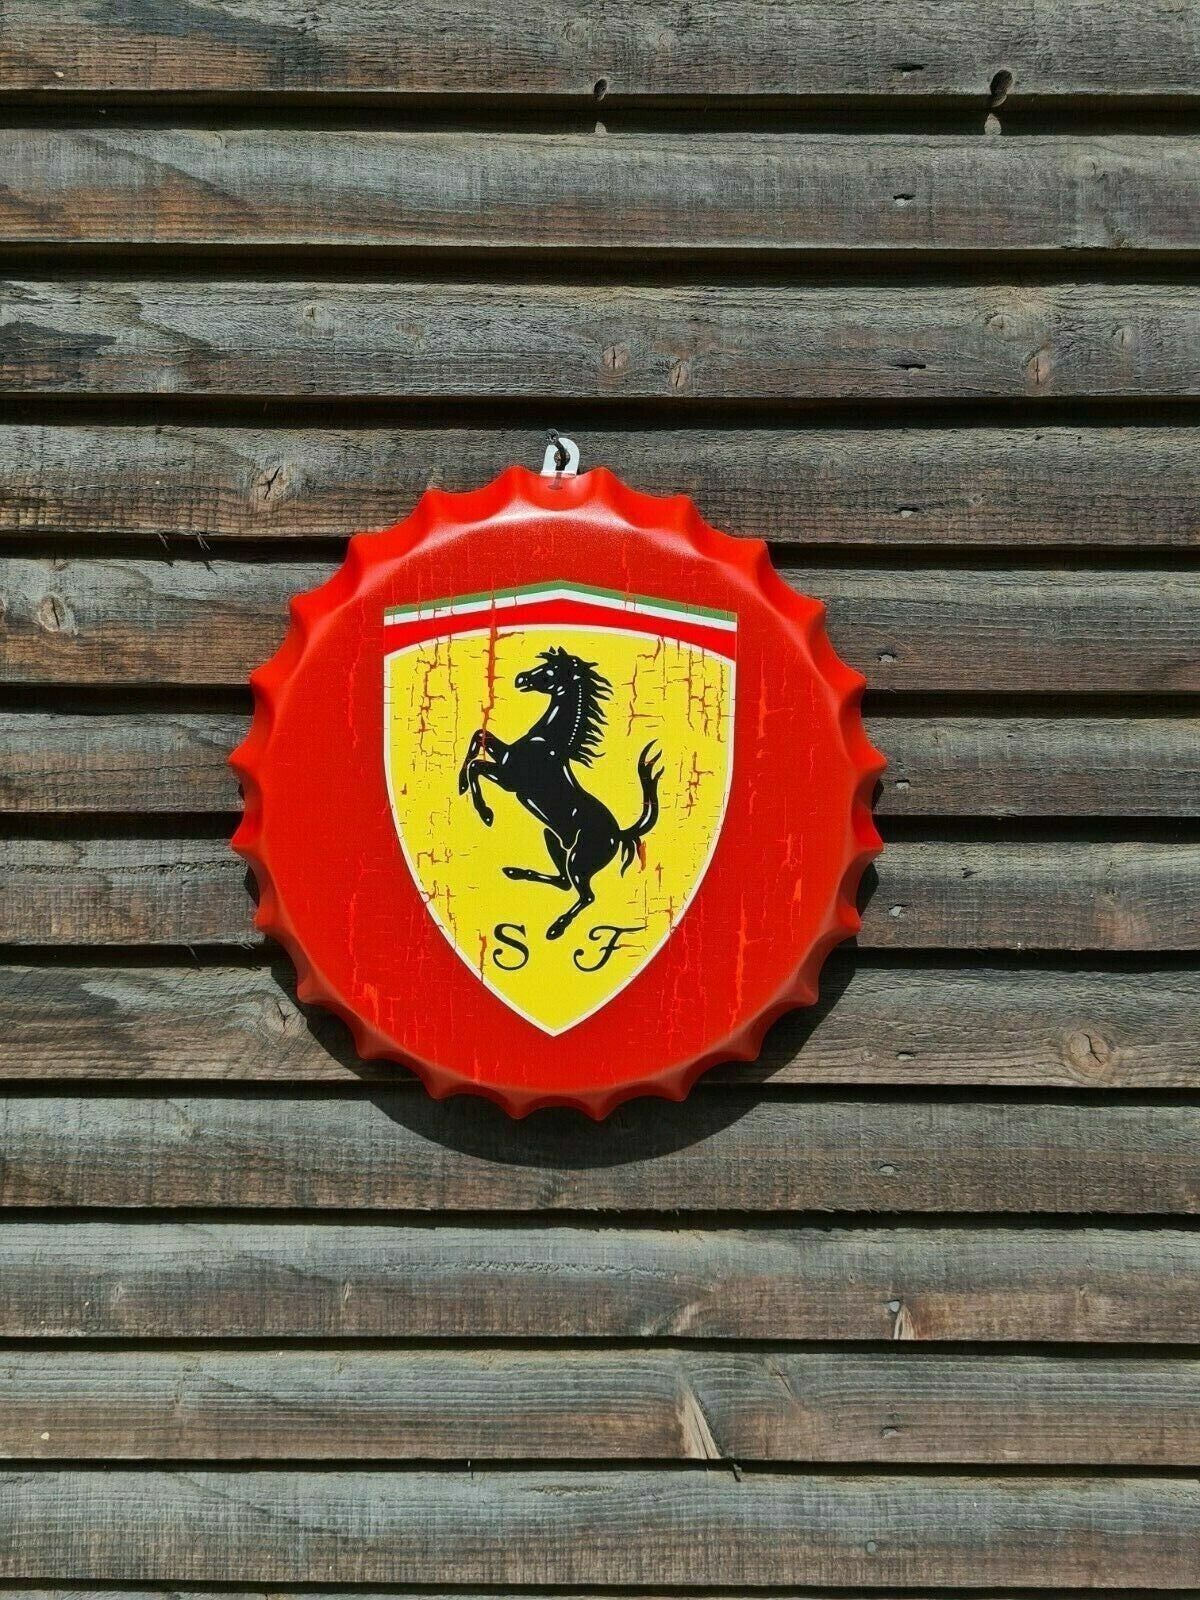 Ferrari Aufkleber in Hessen - Riedstadt